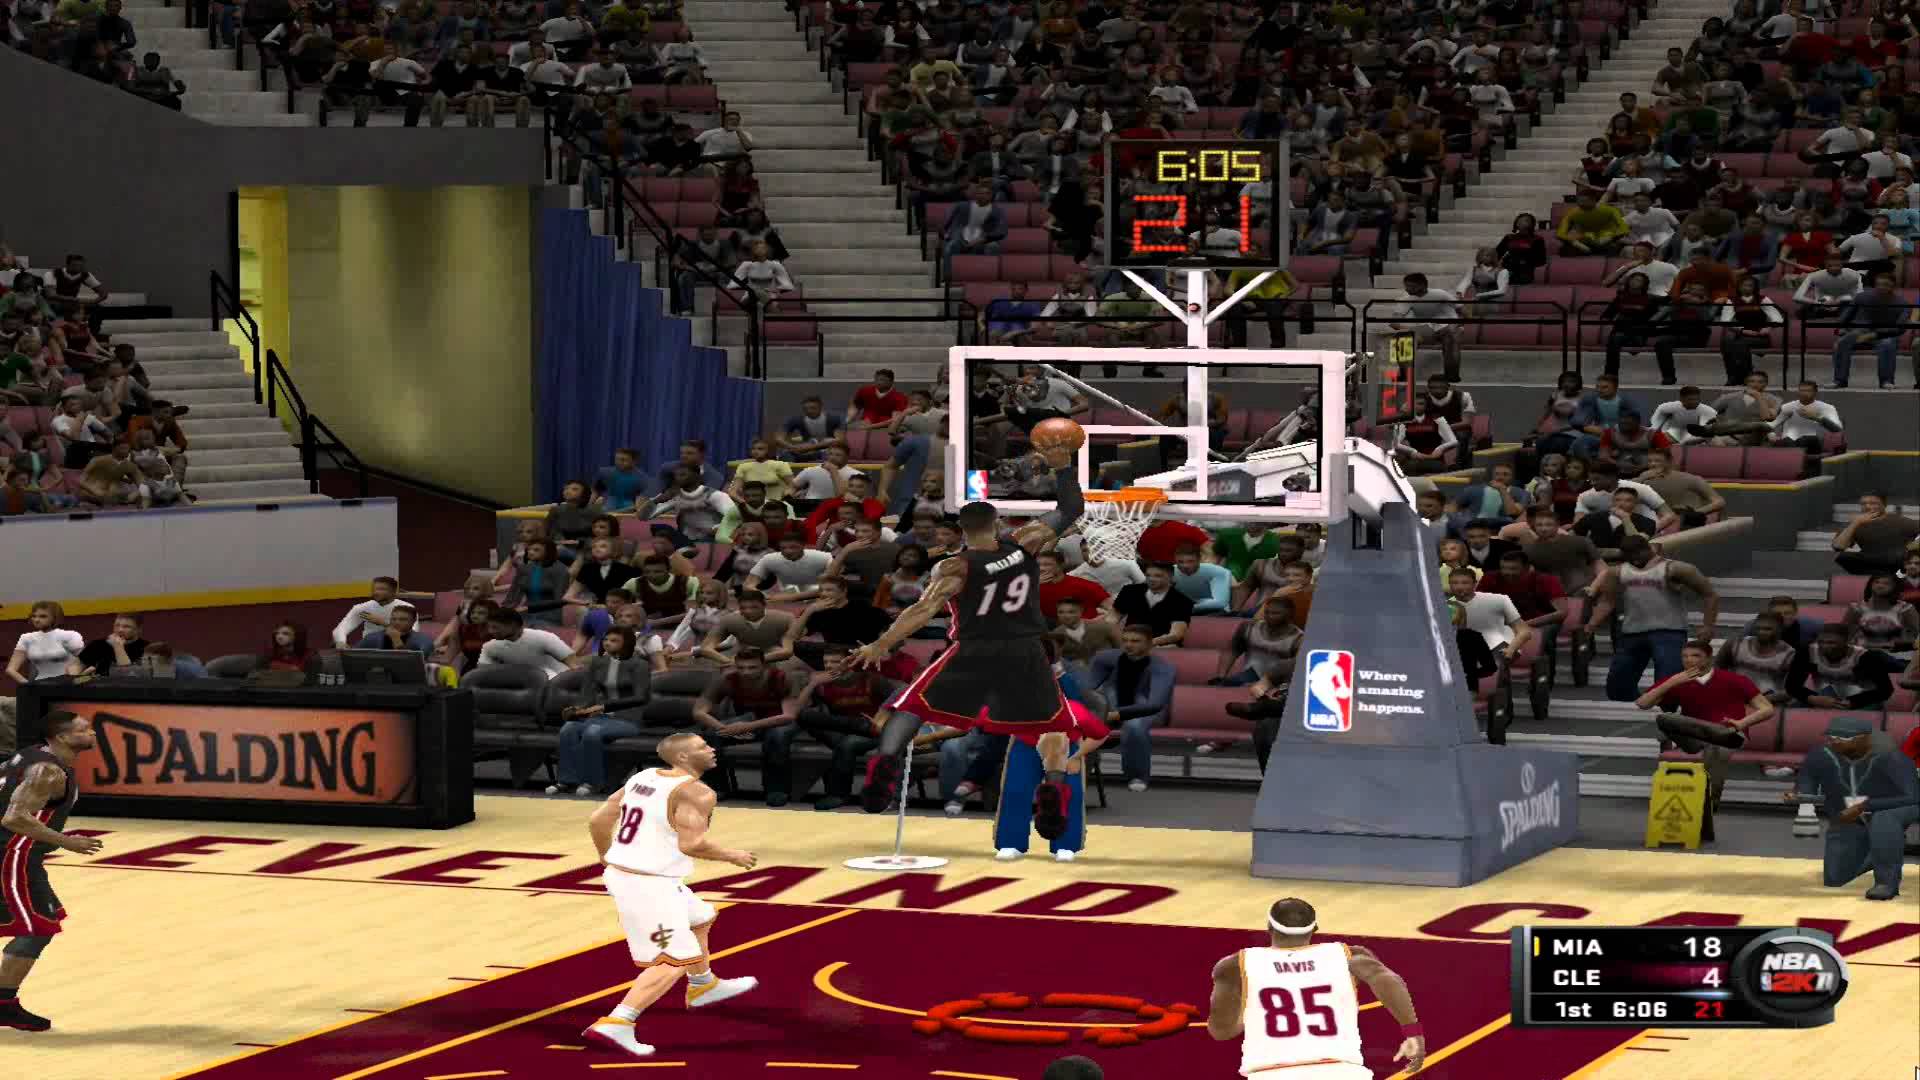 NBA 2k11 Michael Jordan Free Throw dunk